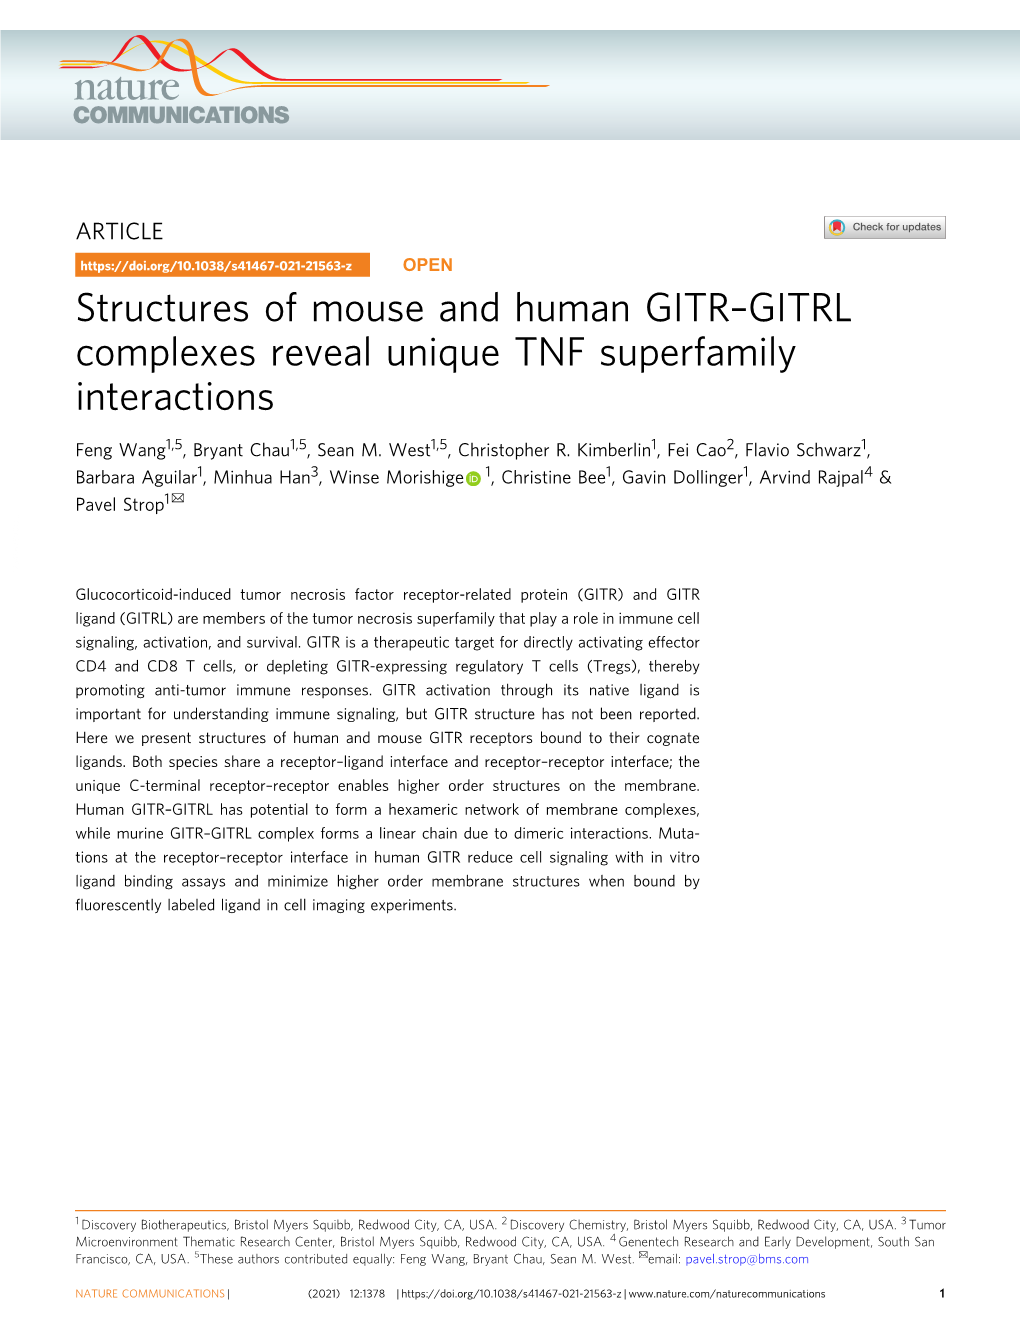 GITRL Complexes Reveal Unique TNF Superfamily Interactions